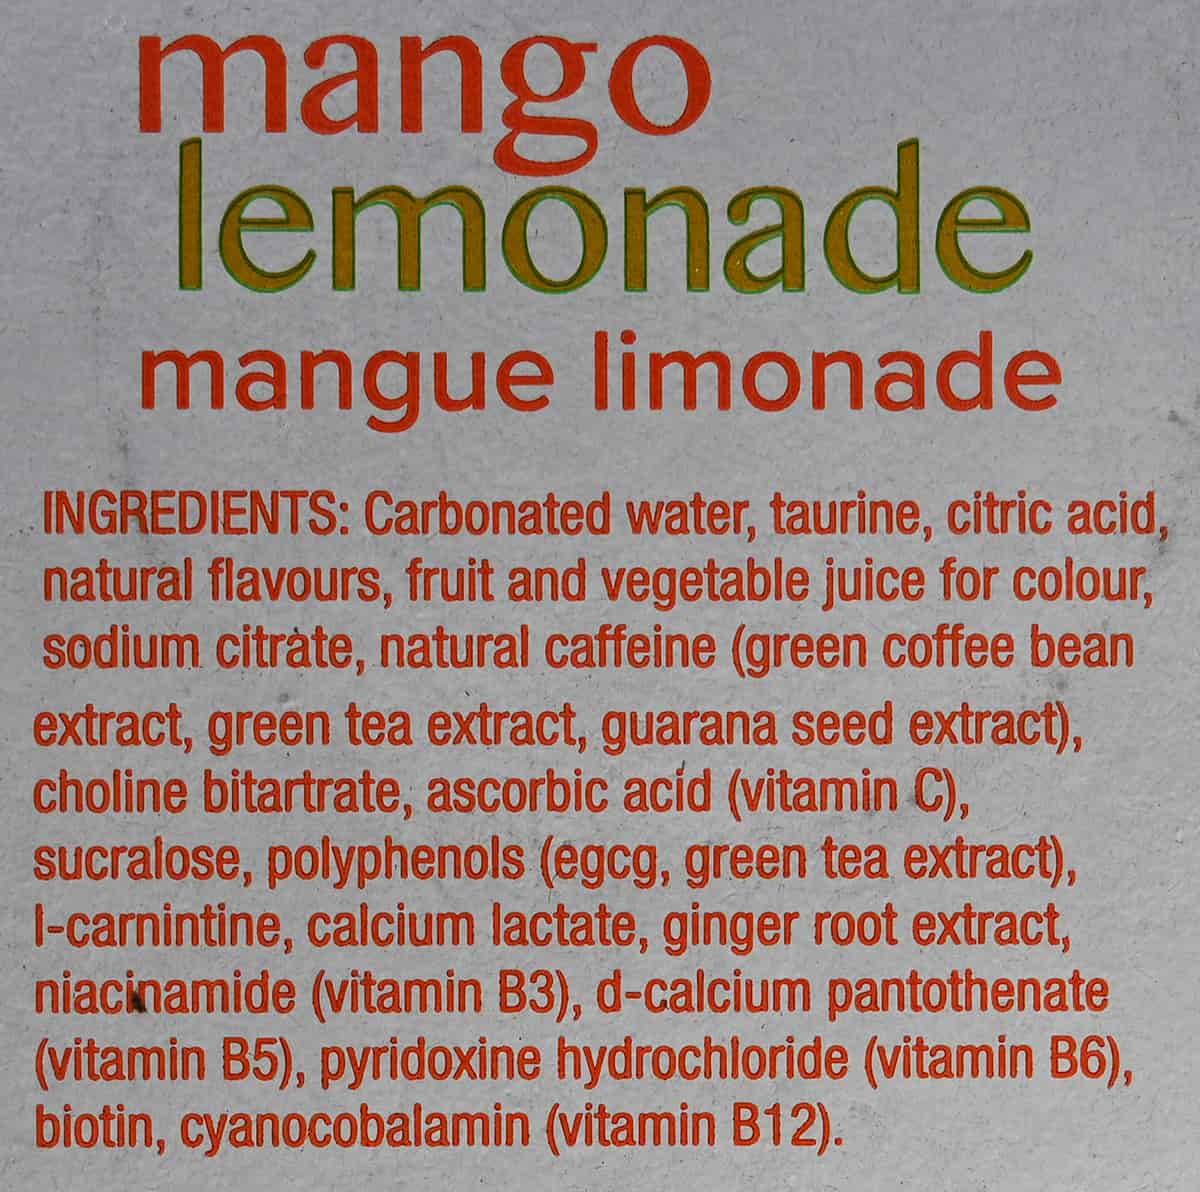 Mango lemonade ingredients list from the box.